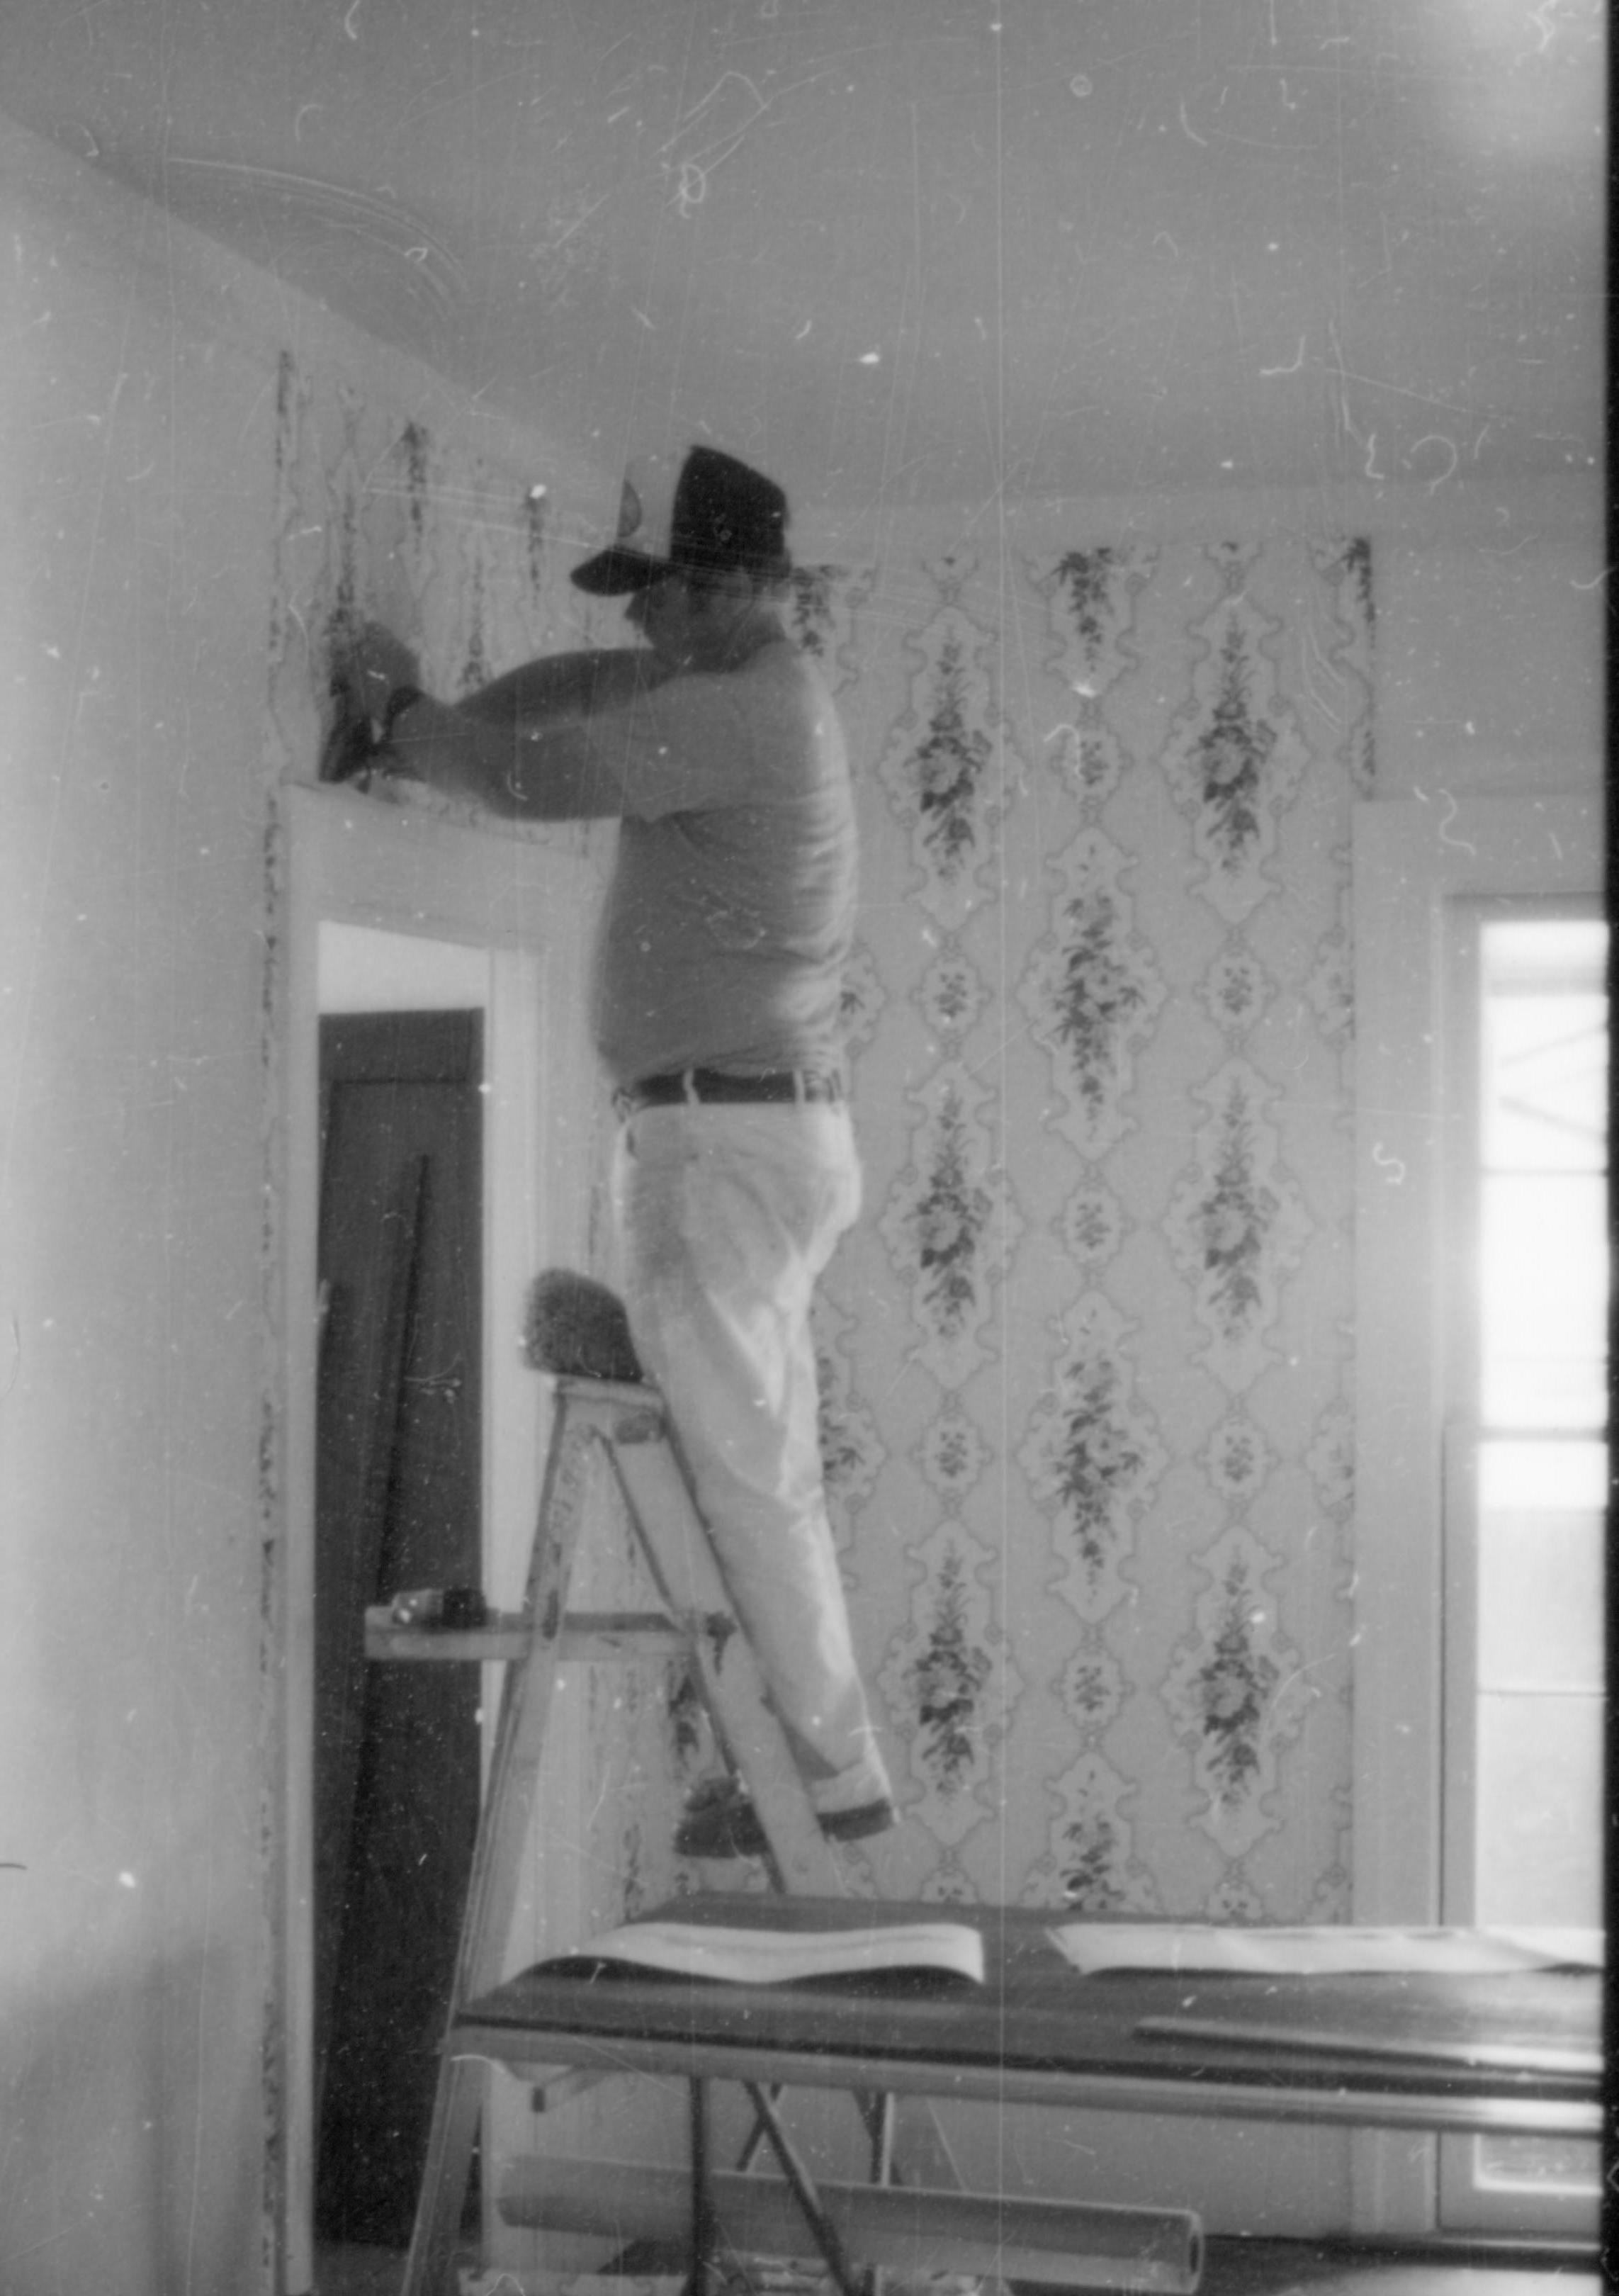 NA Lincoln, Home, Restoration, wallpaper